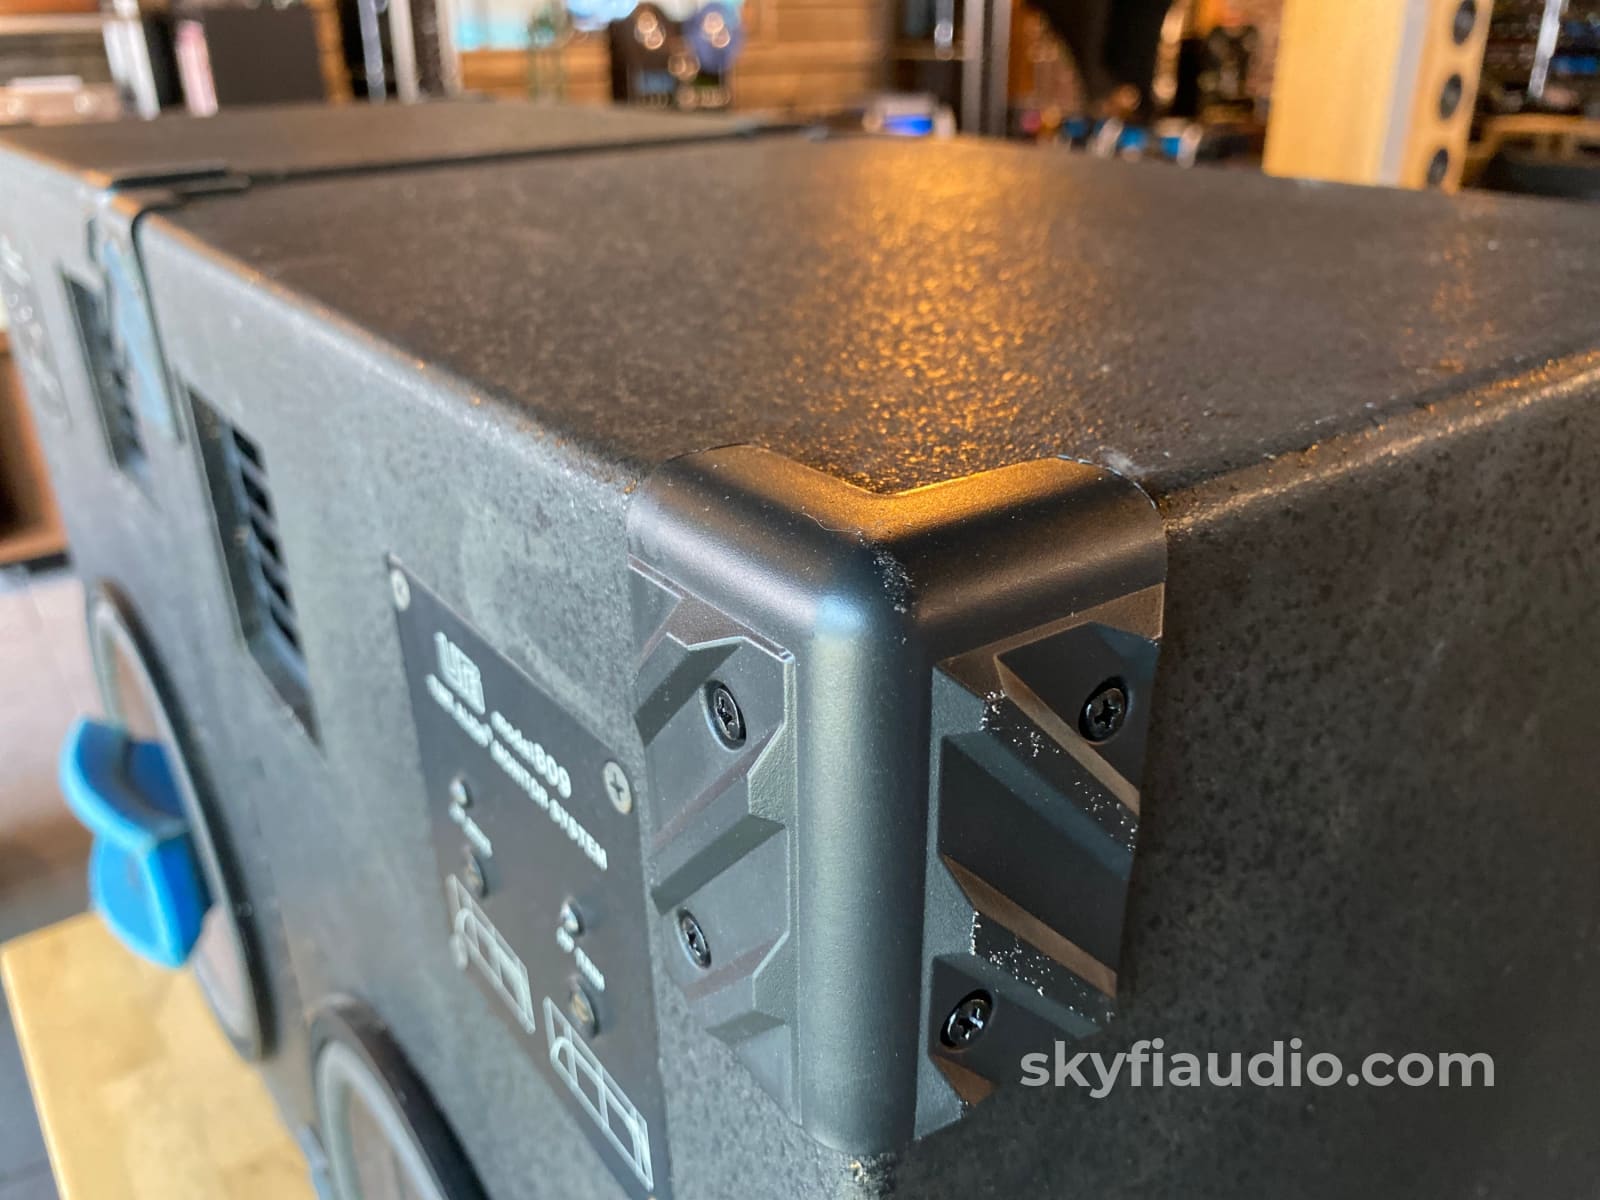 Urei 809 Time Aligned Coaxial Studio Monitor Speakers - Skyfi Customized